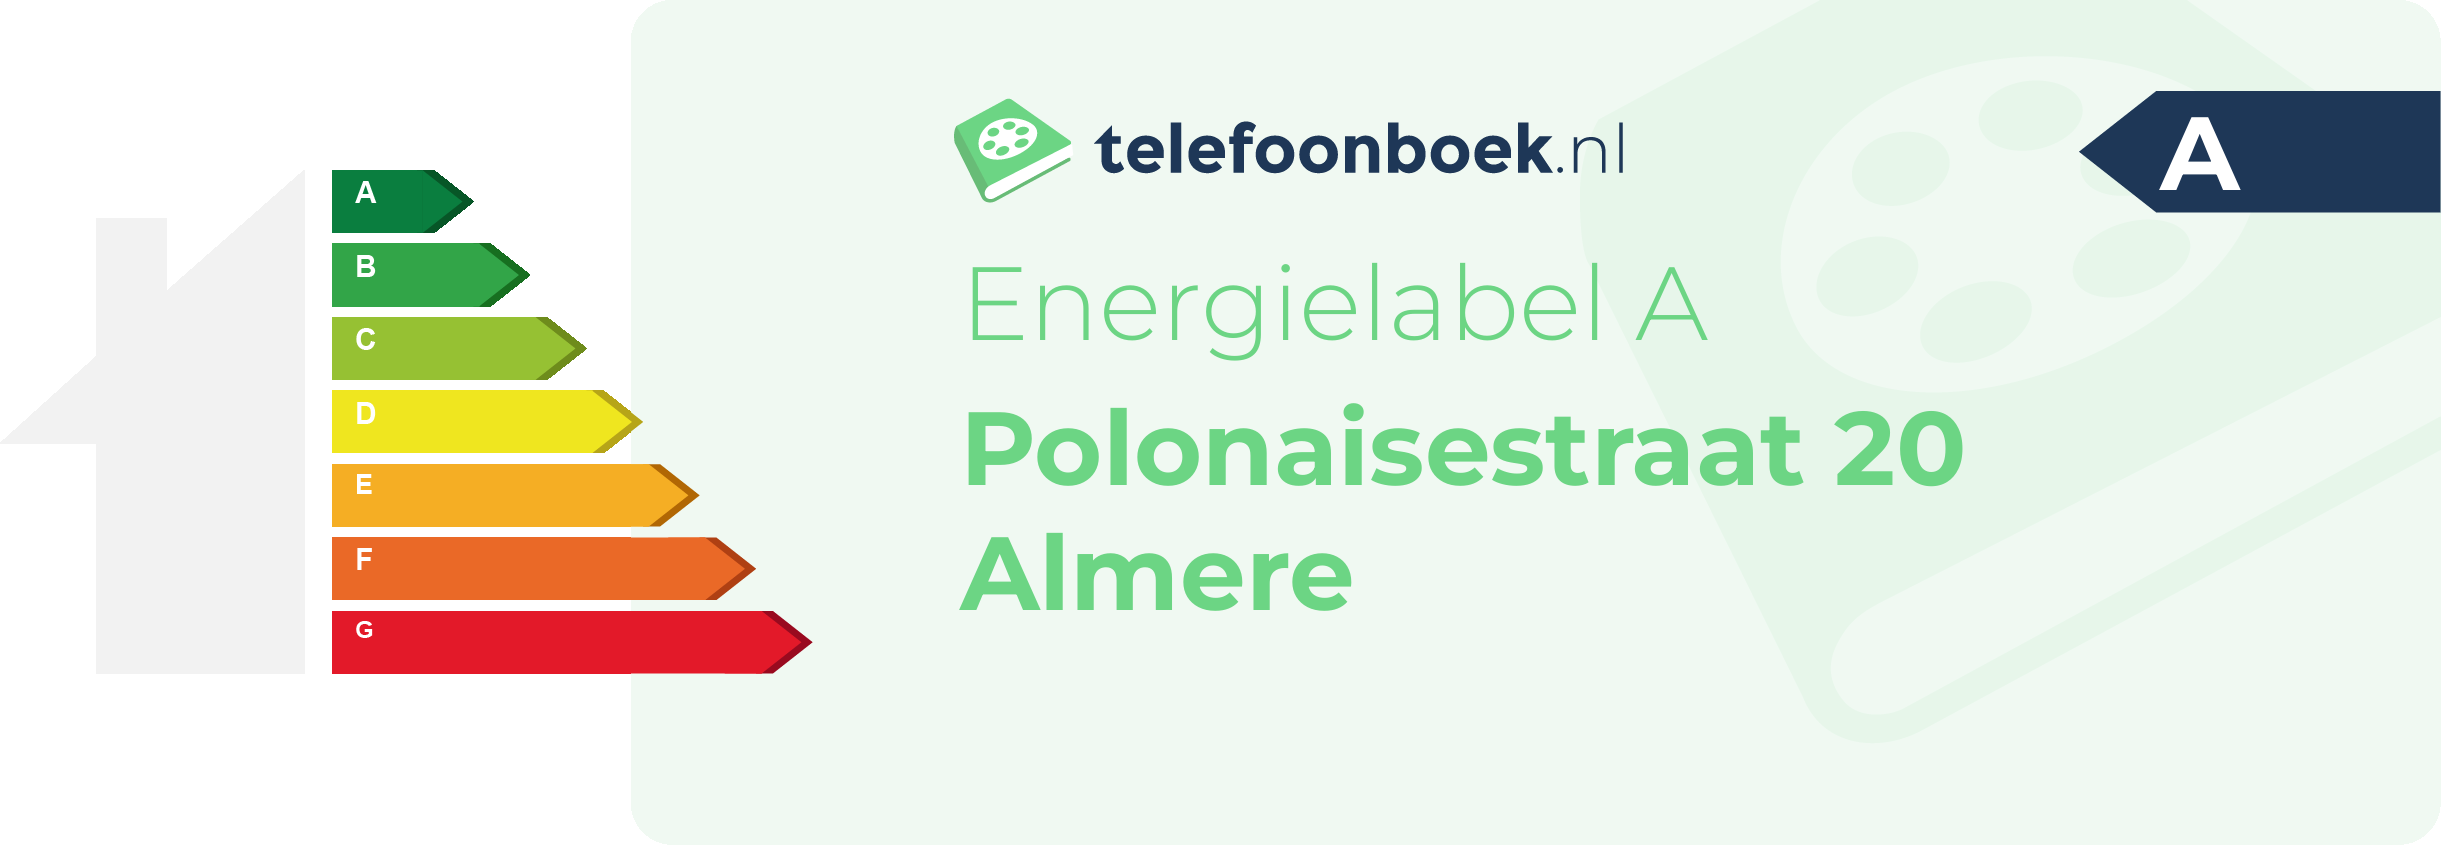 Energielabel Polonaisestraat 20 Almere